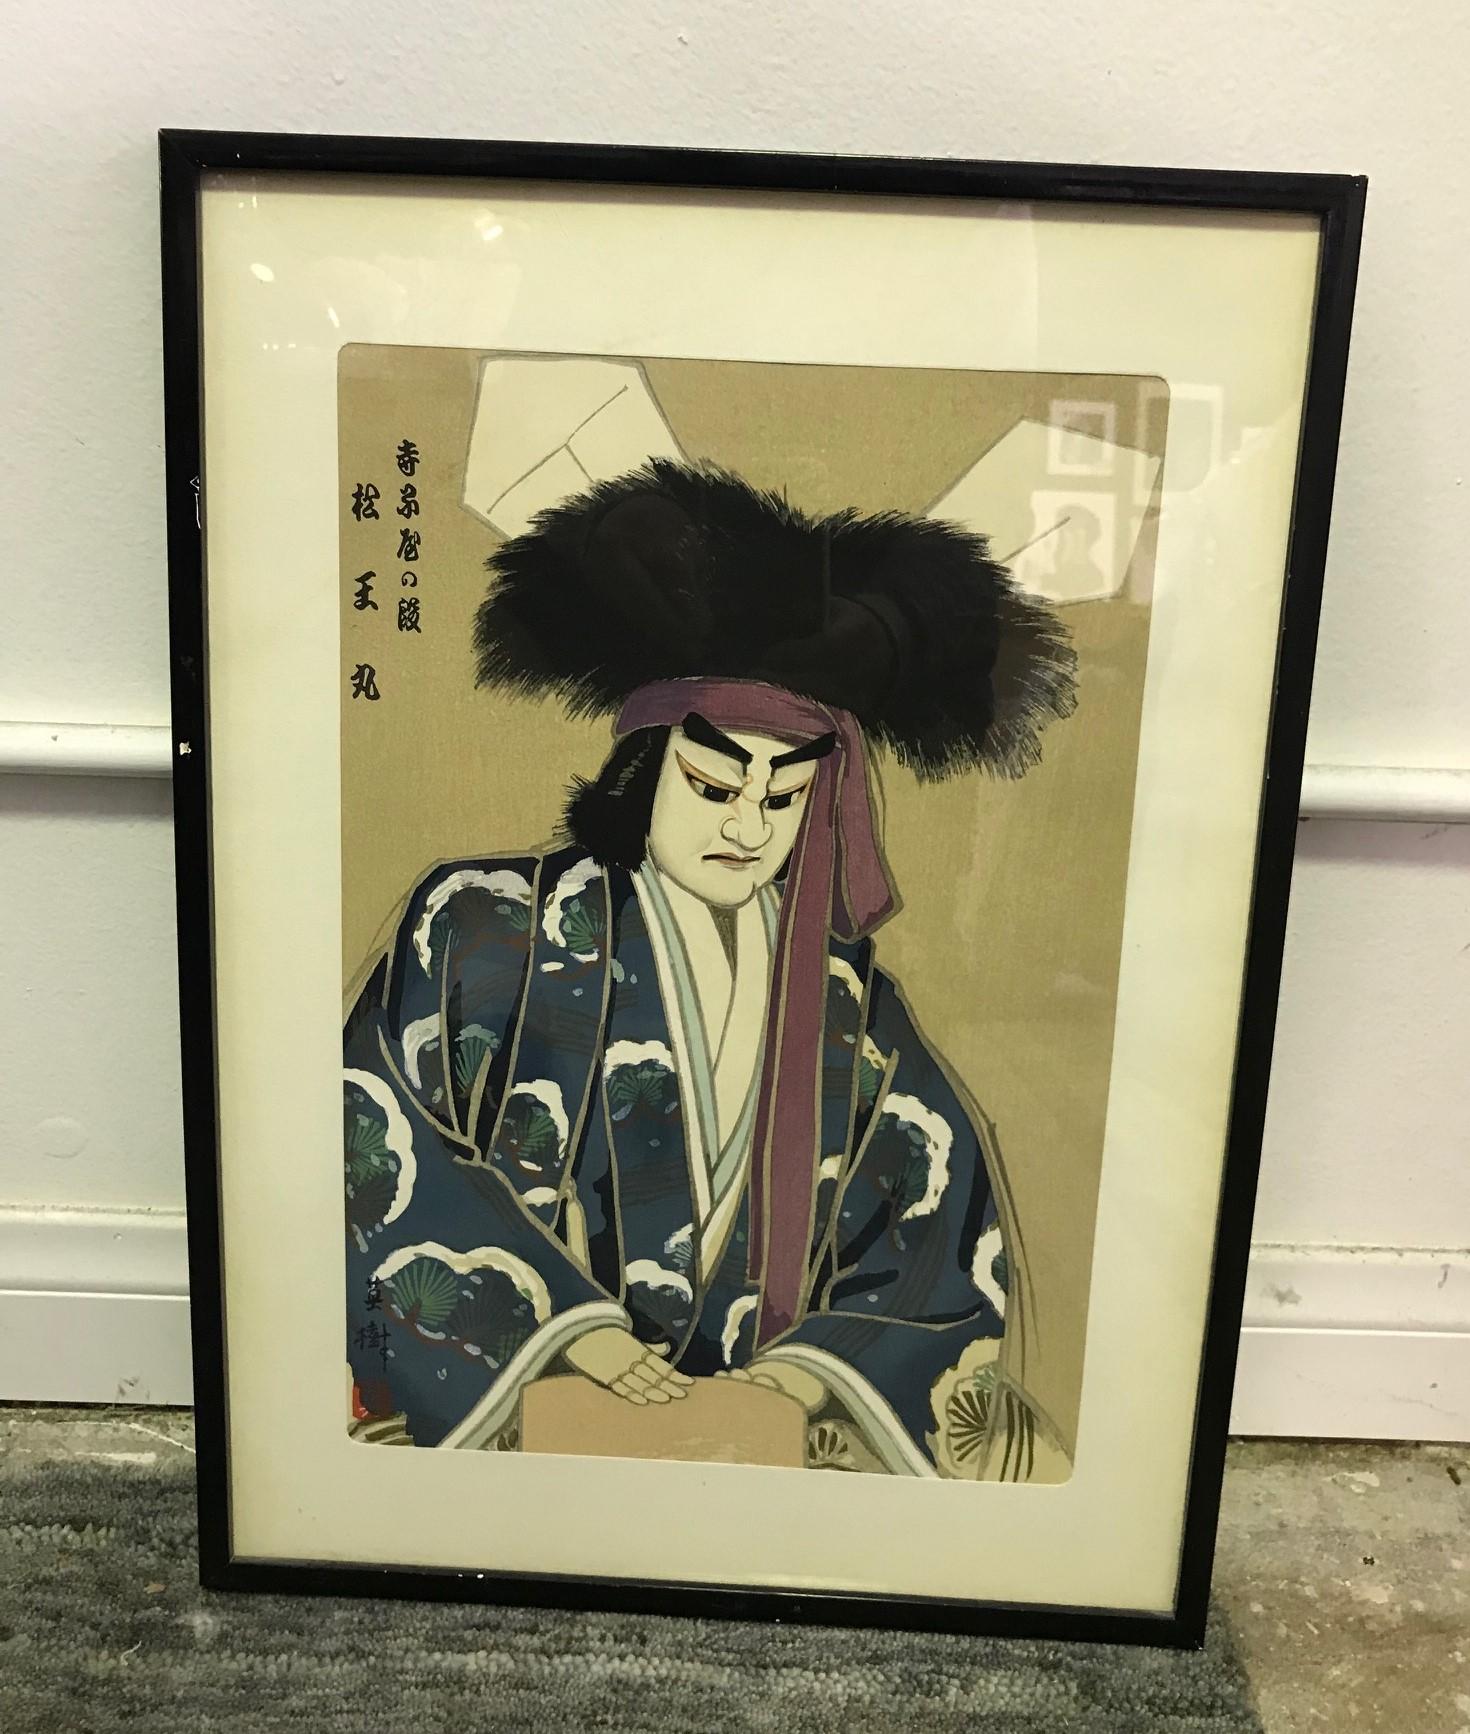 A somewhat rare and hard to find image by Japanese artist Hideki Hanafusa or Konobu Hasegawa of a Bunraku puppet titled 